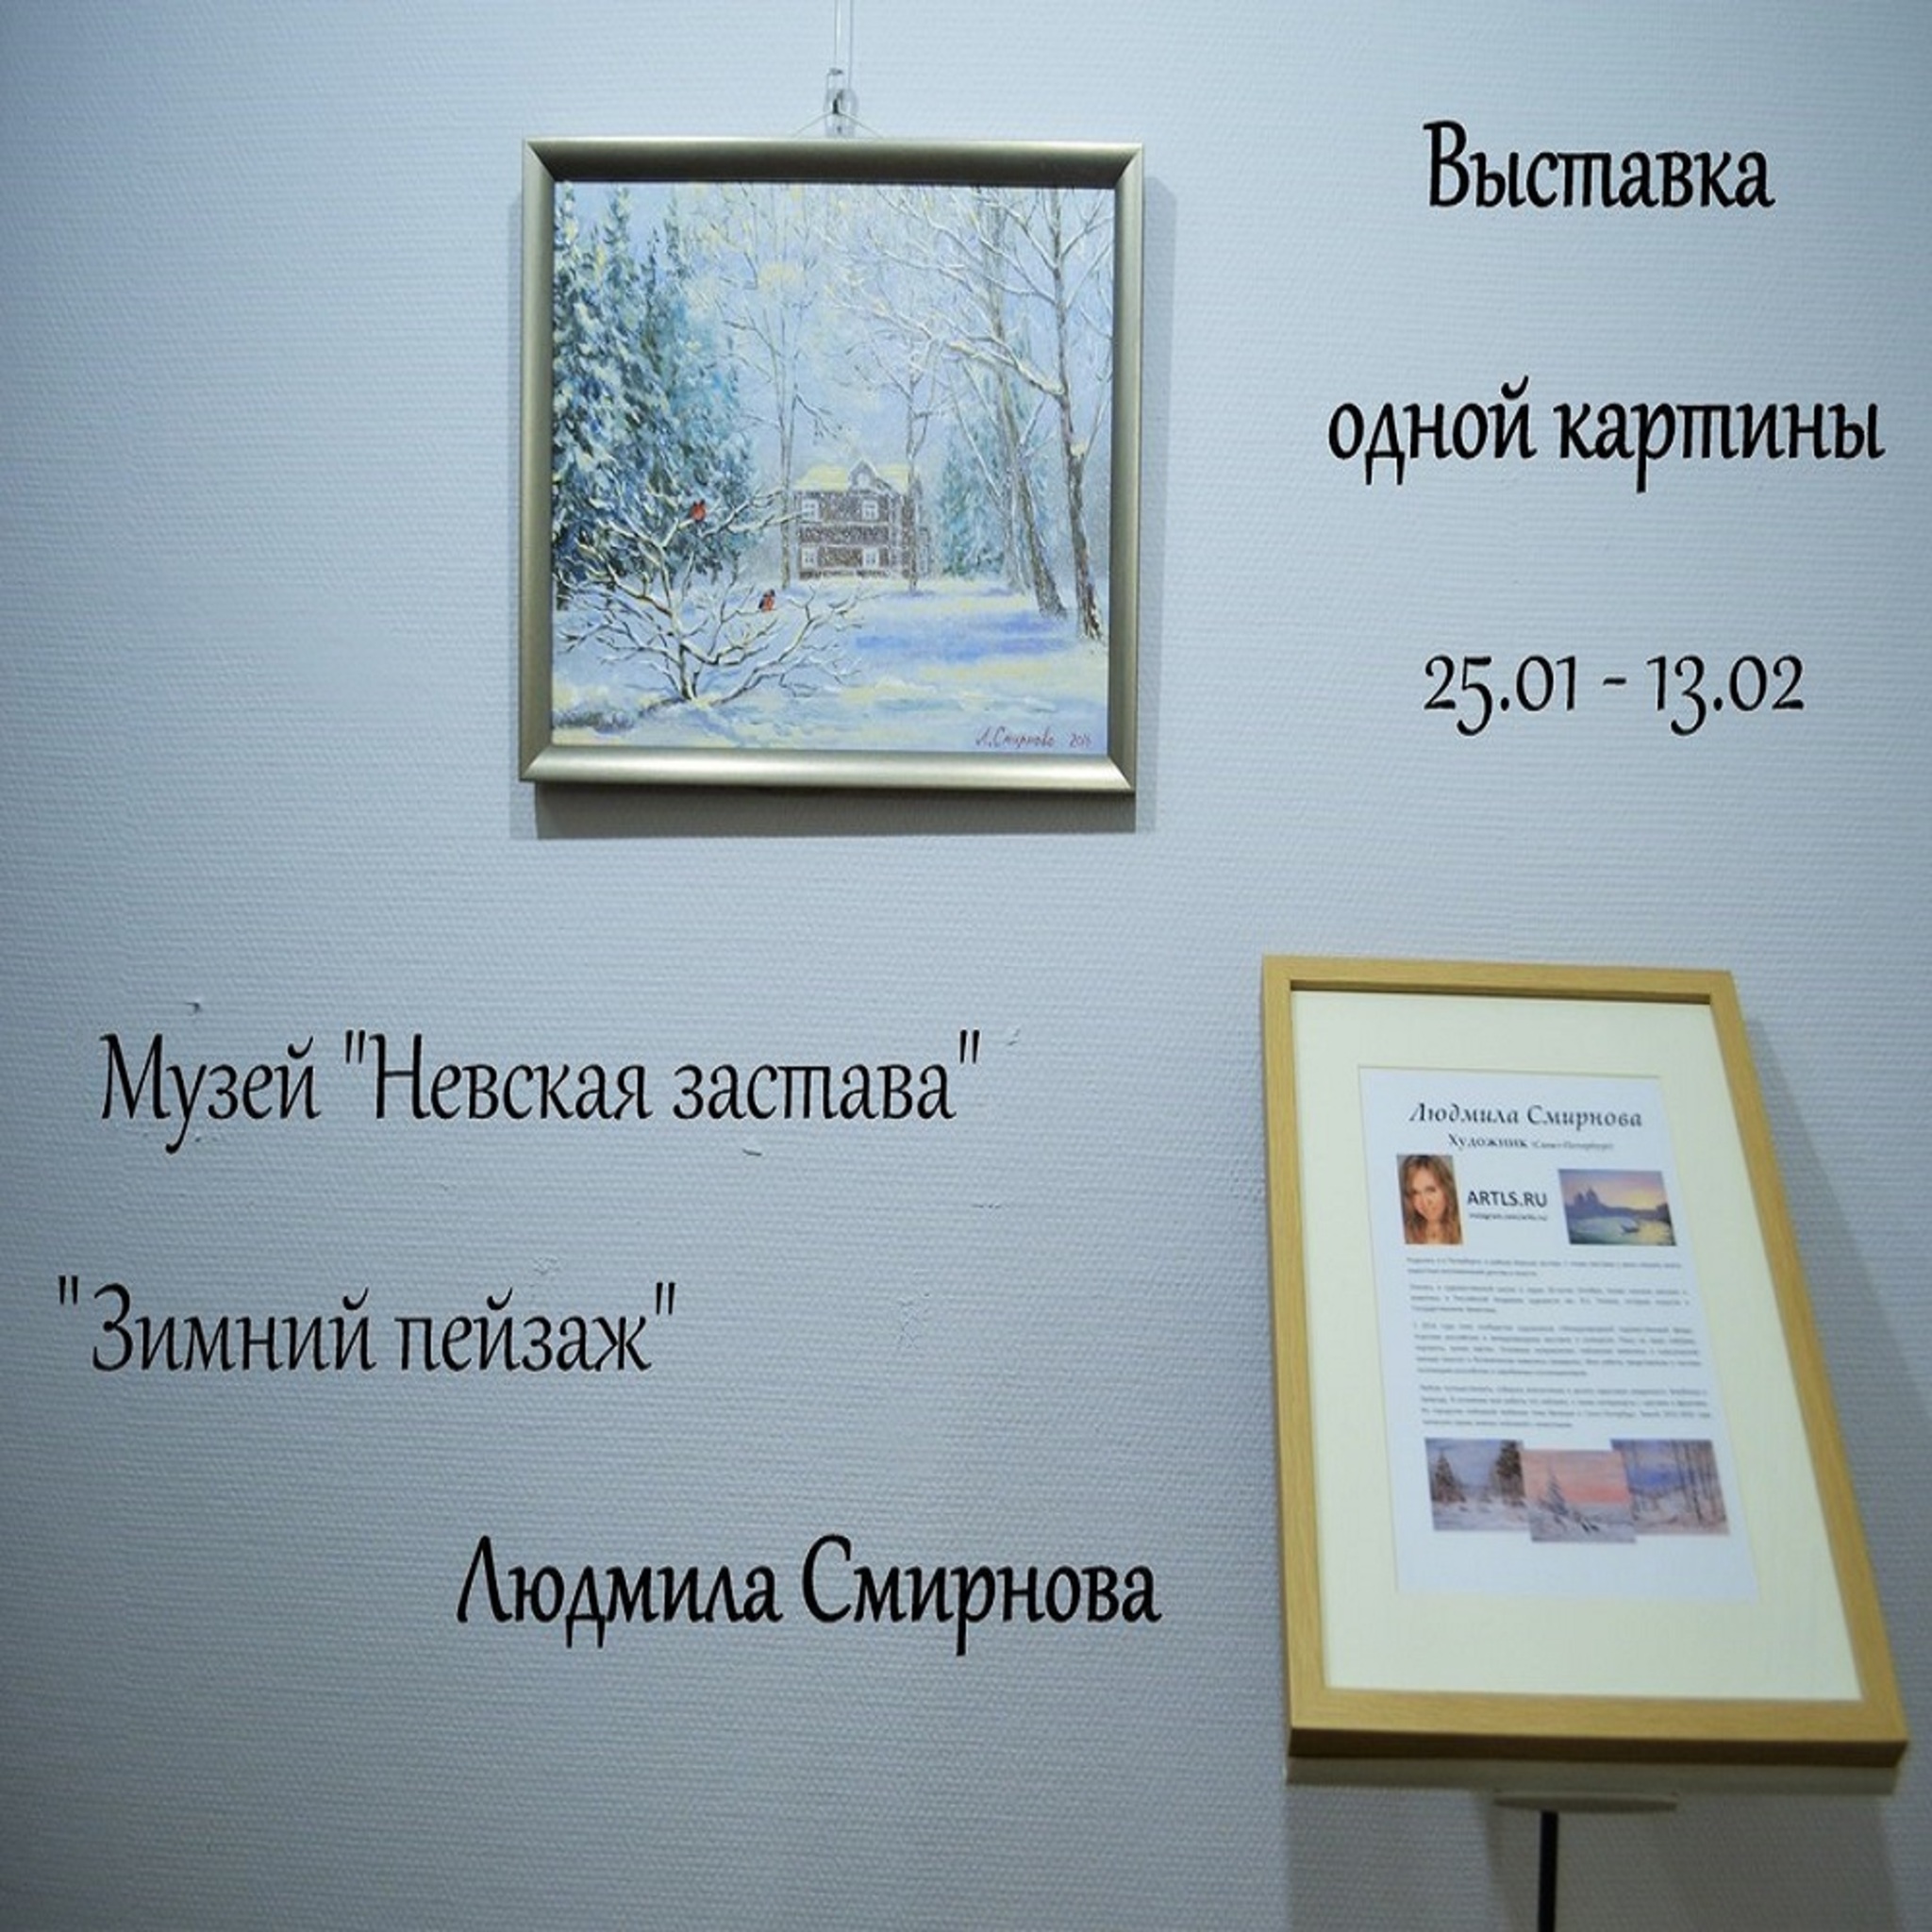 Exhibition of one painting artist Lyudmila Smirnova